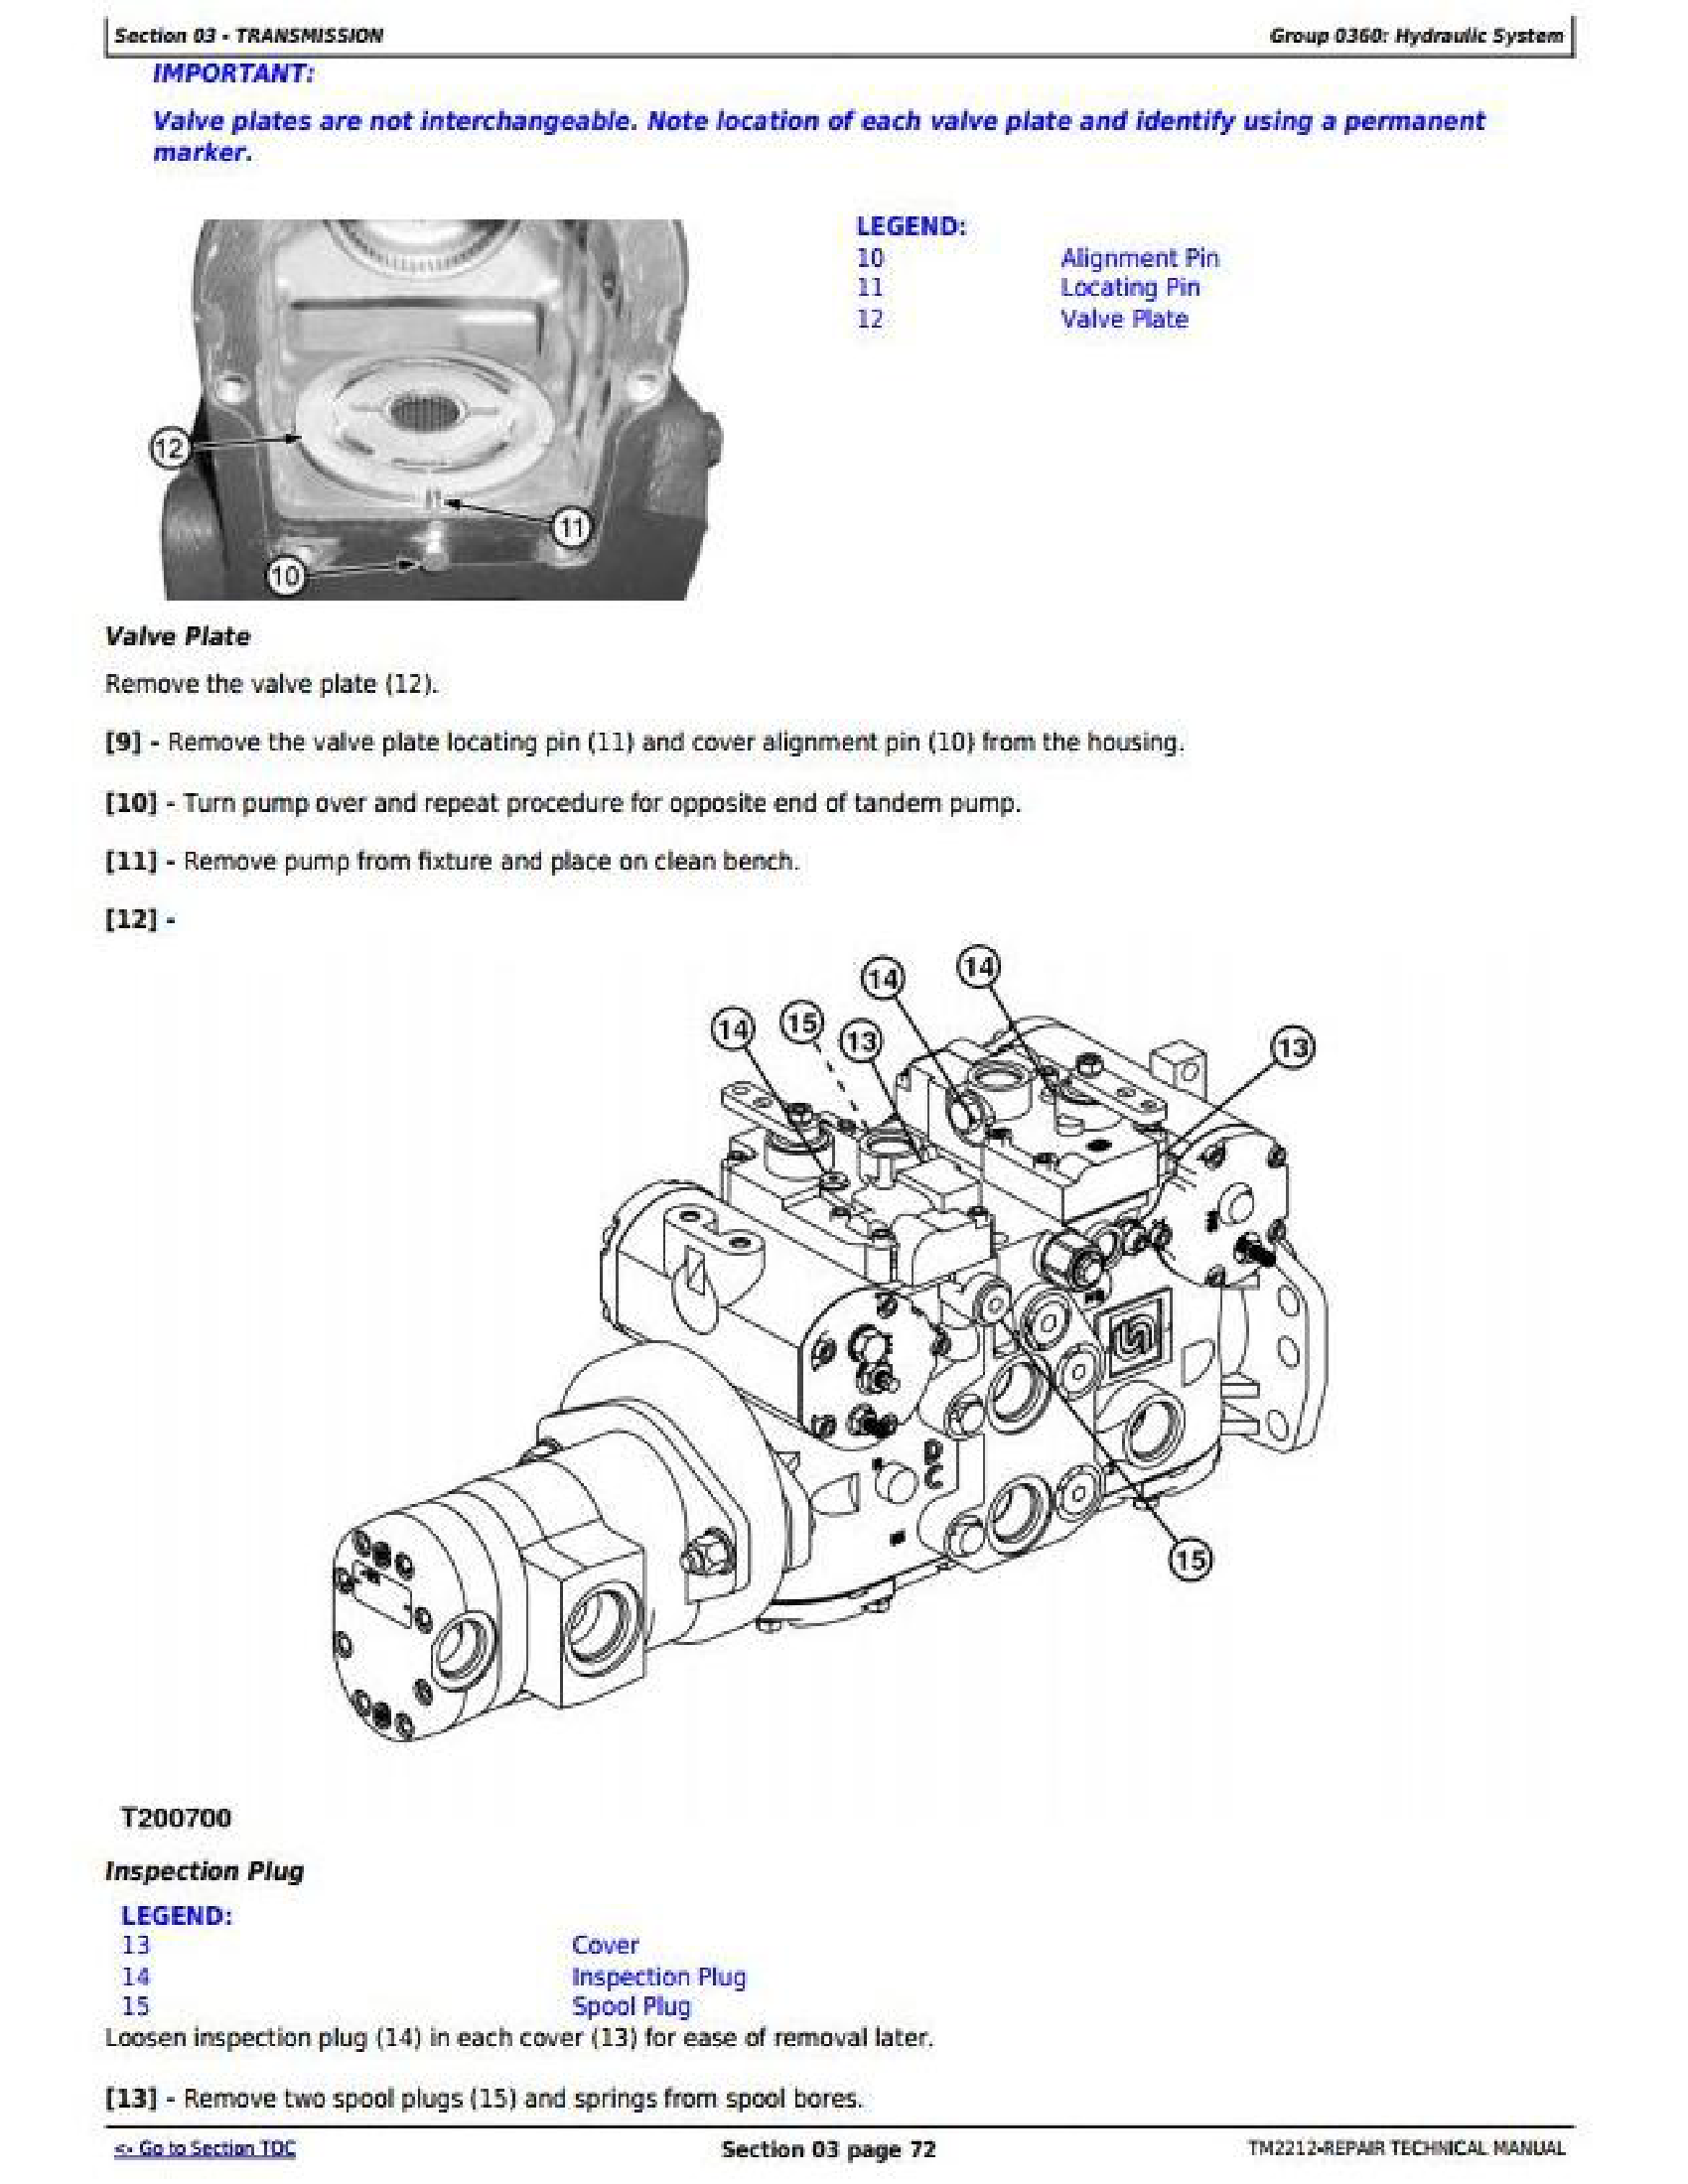 John Deere M962i manual pdf